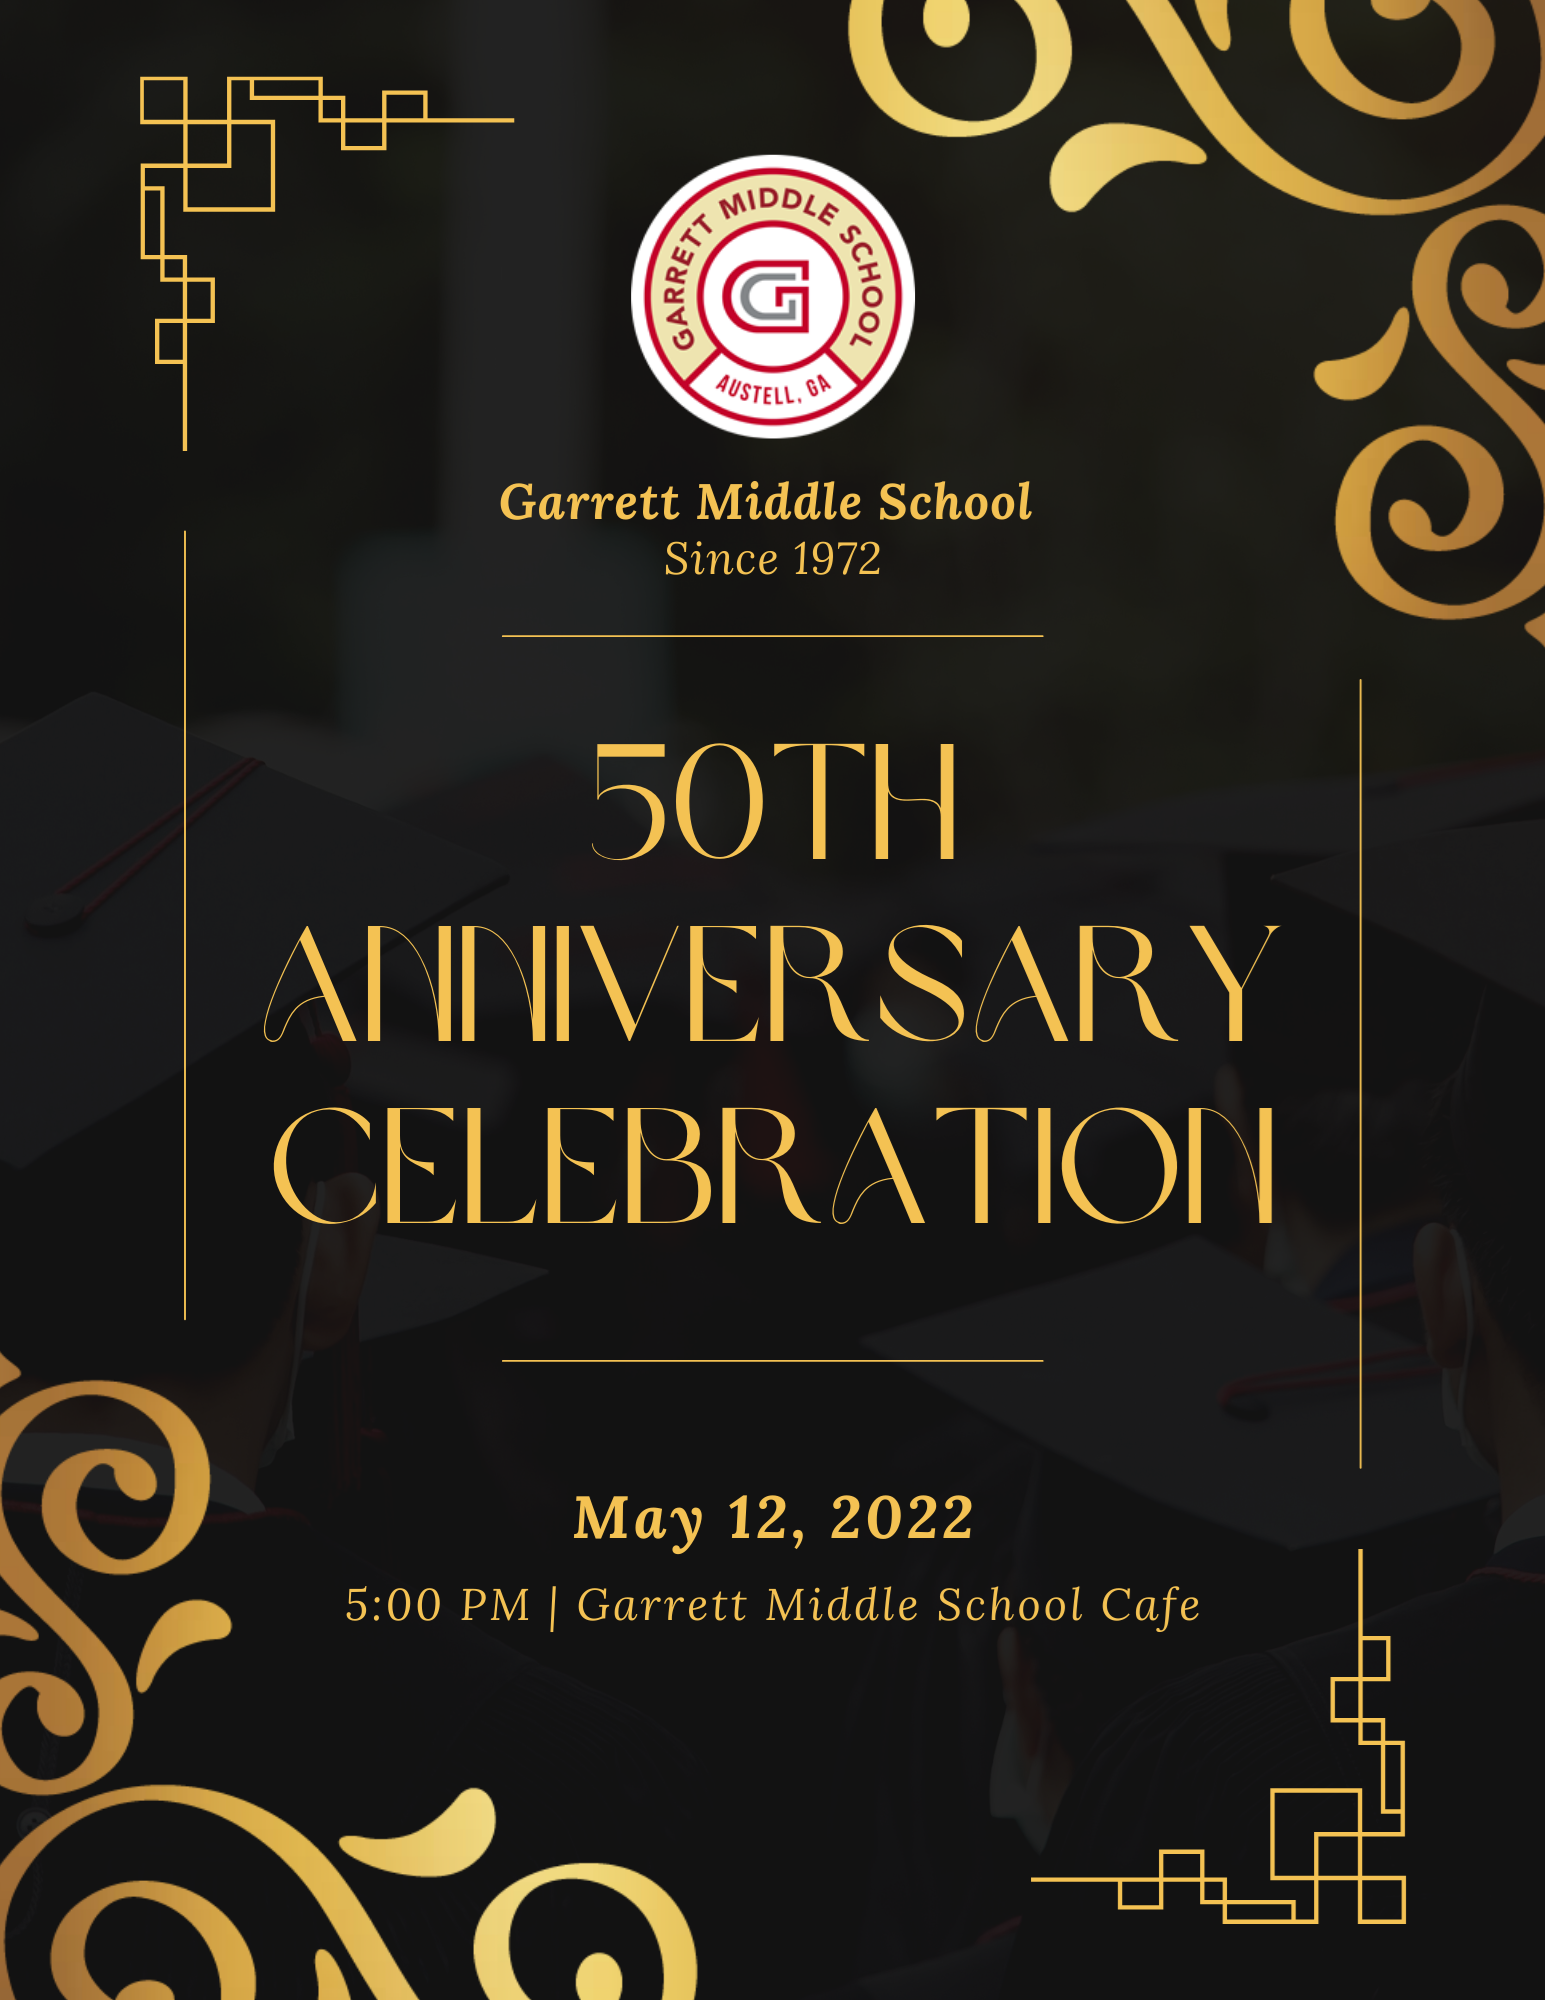 Garrett Middle School 50th anniversary celebration on May 12